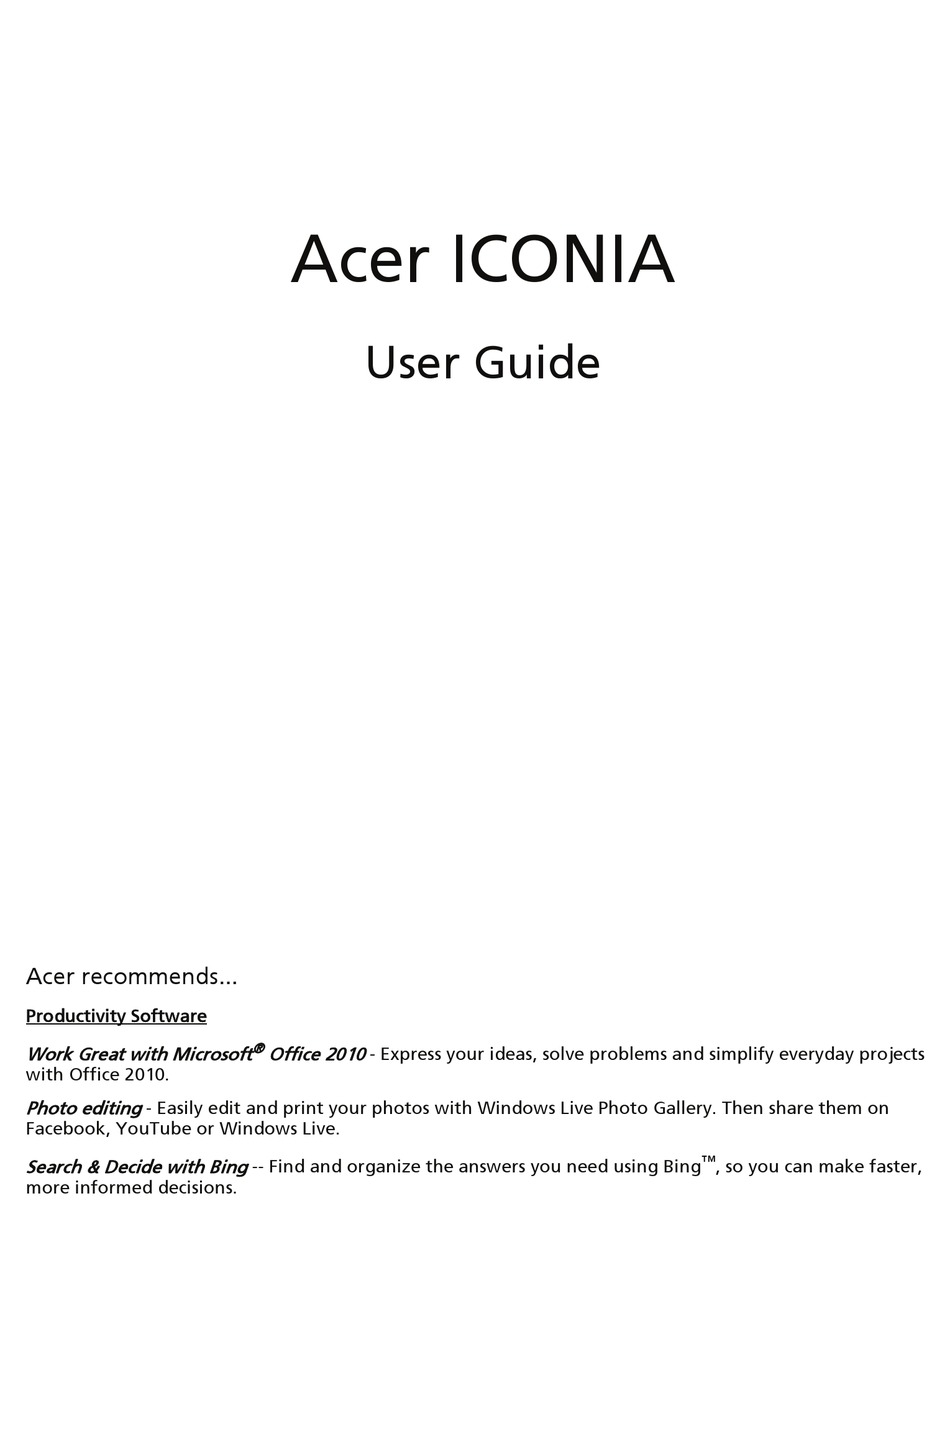 Acer ring software download